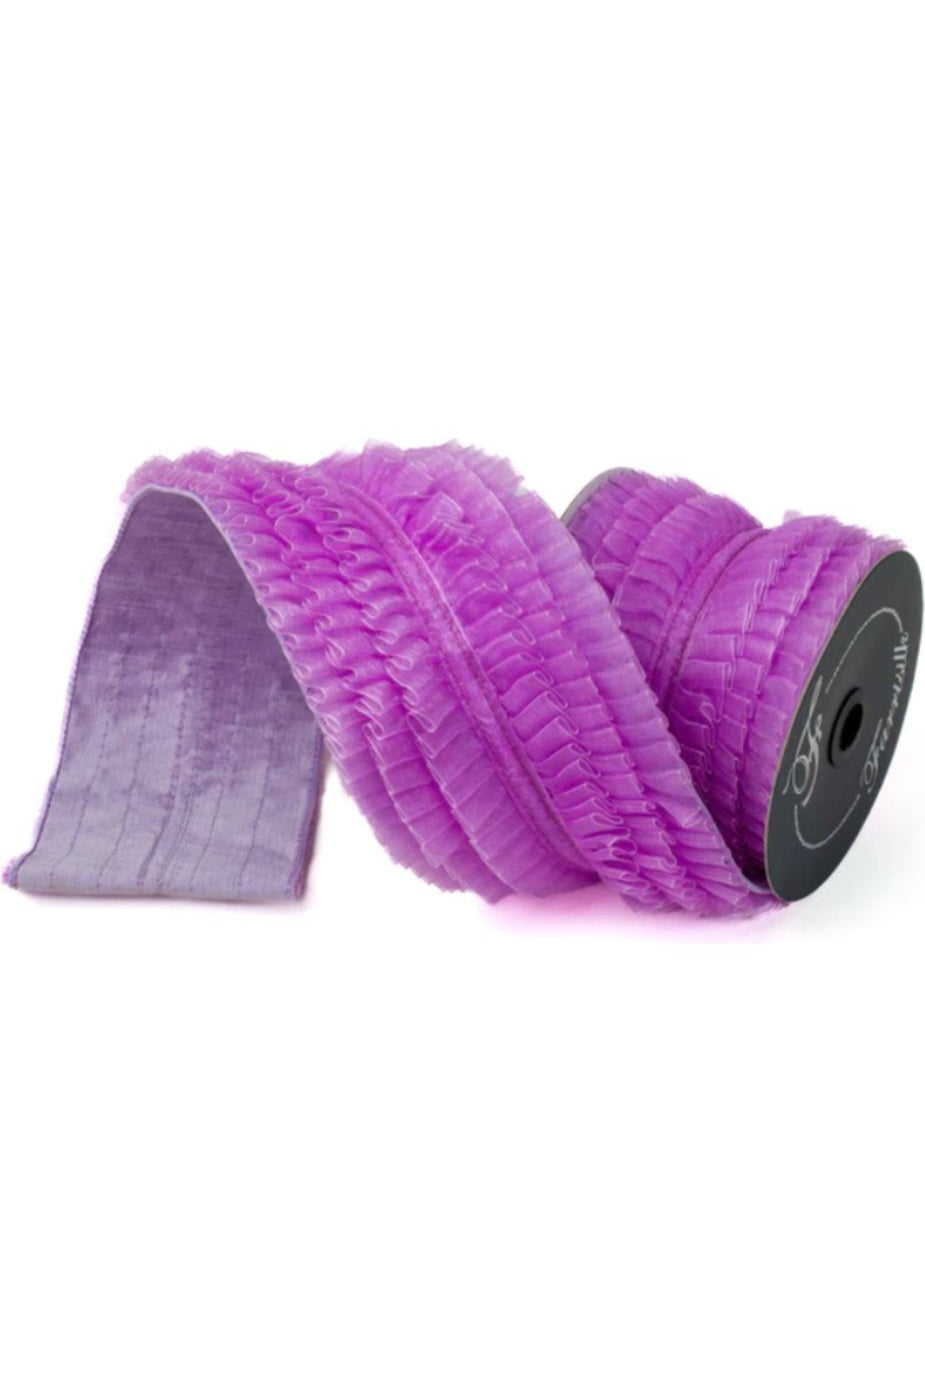 Shop For 4" Farrisilk Ballerina Ribbon: Lavender (5 Yards) RK695-70